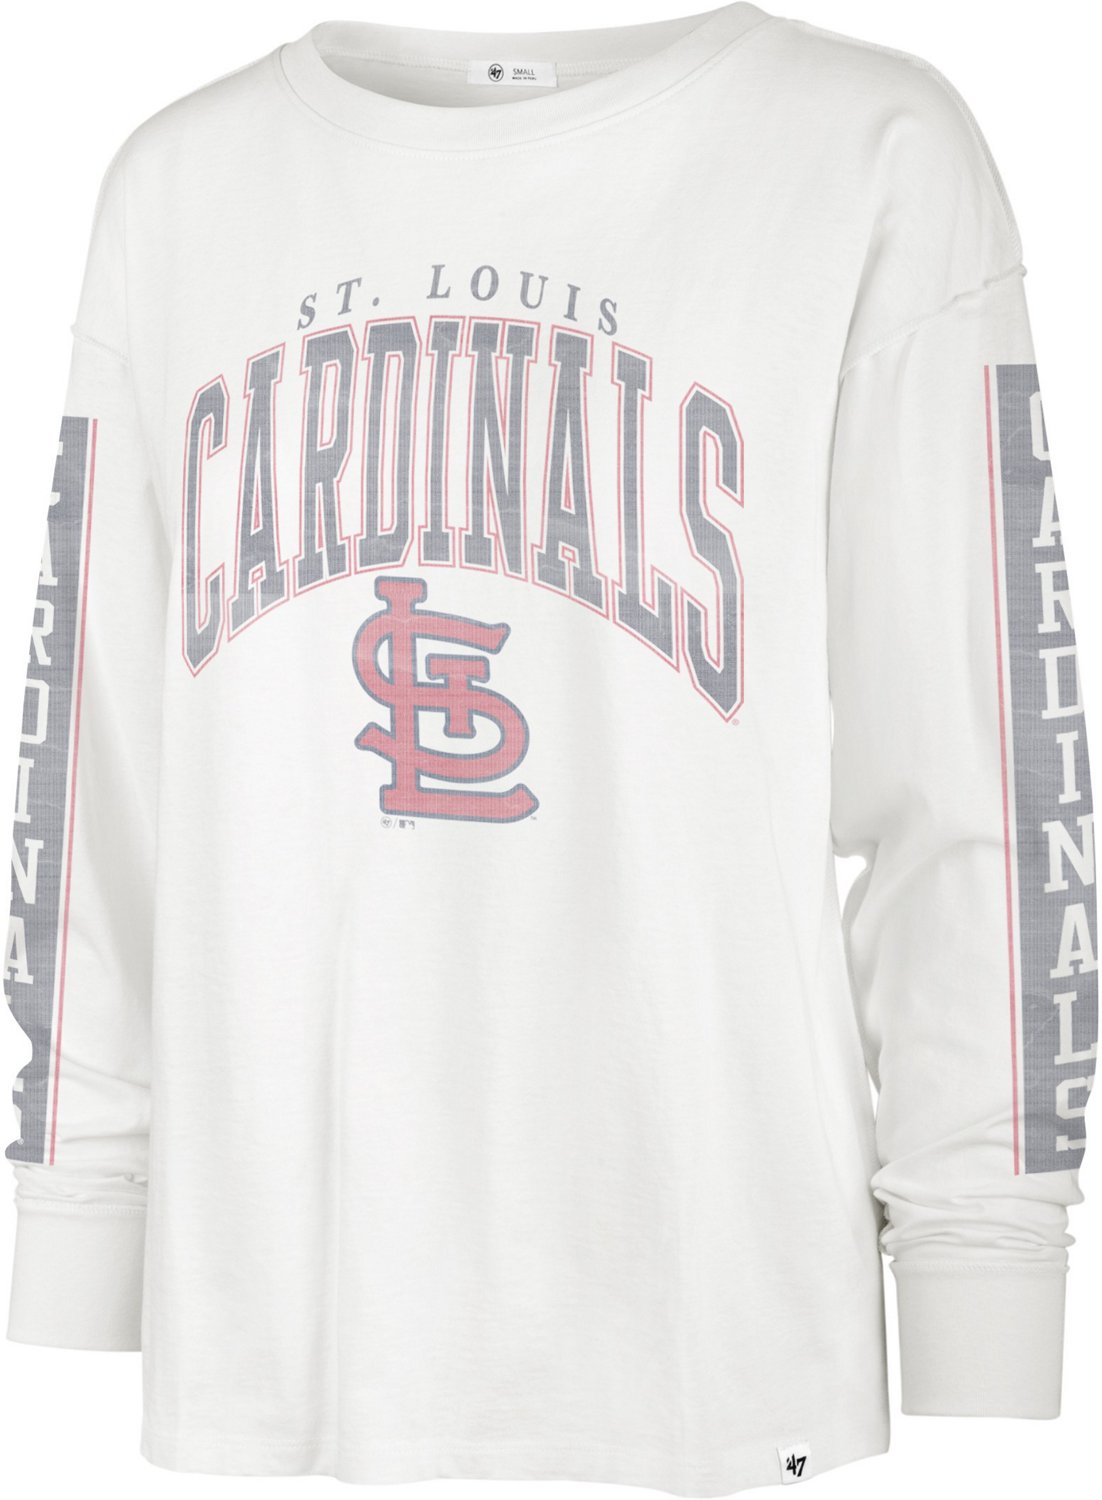 47 St. Louis Cardinals Women's Statement SOA Long Sleeve Graphic T-shirt